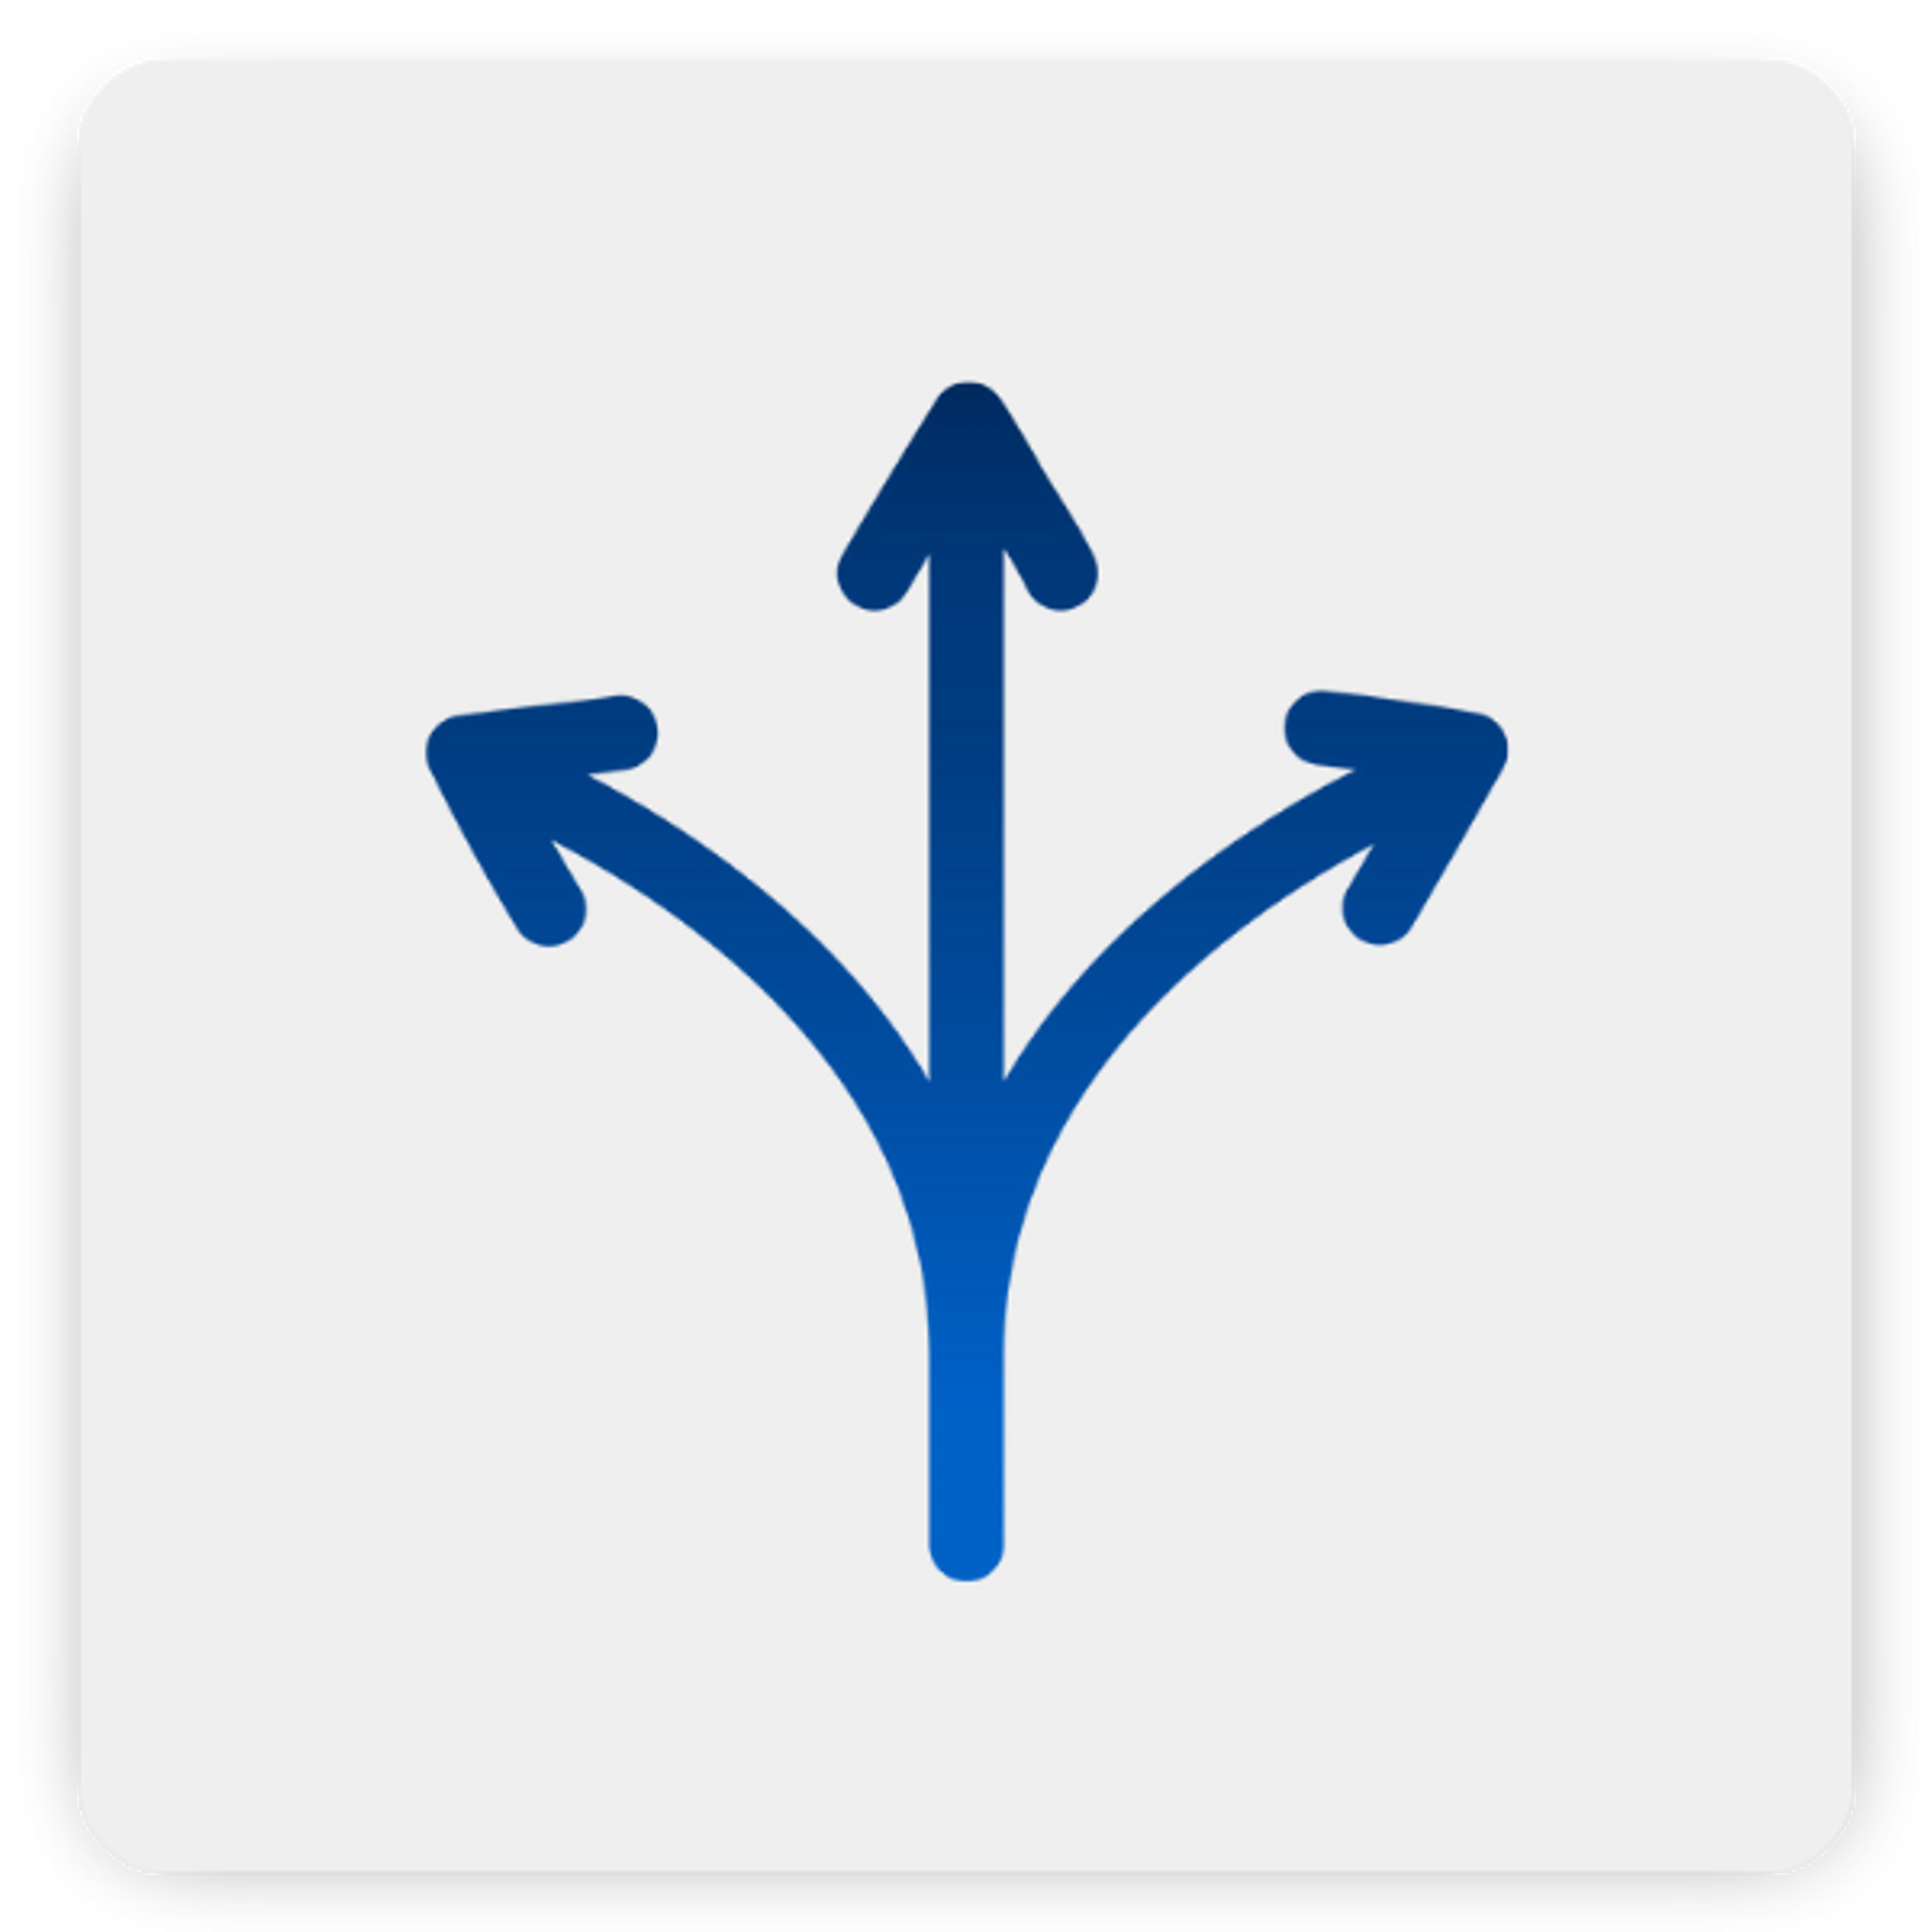 Multi-directional arrow illustrating flexibility